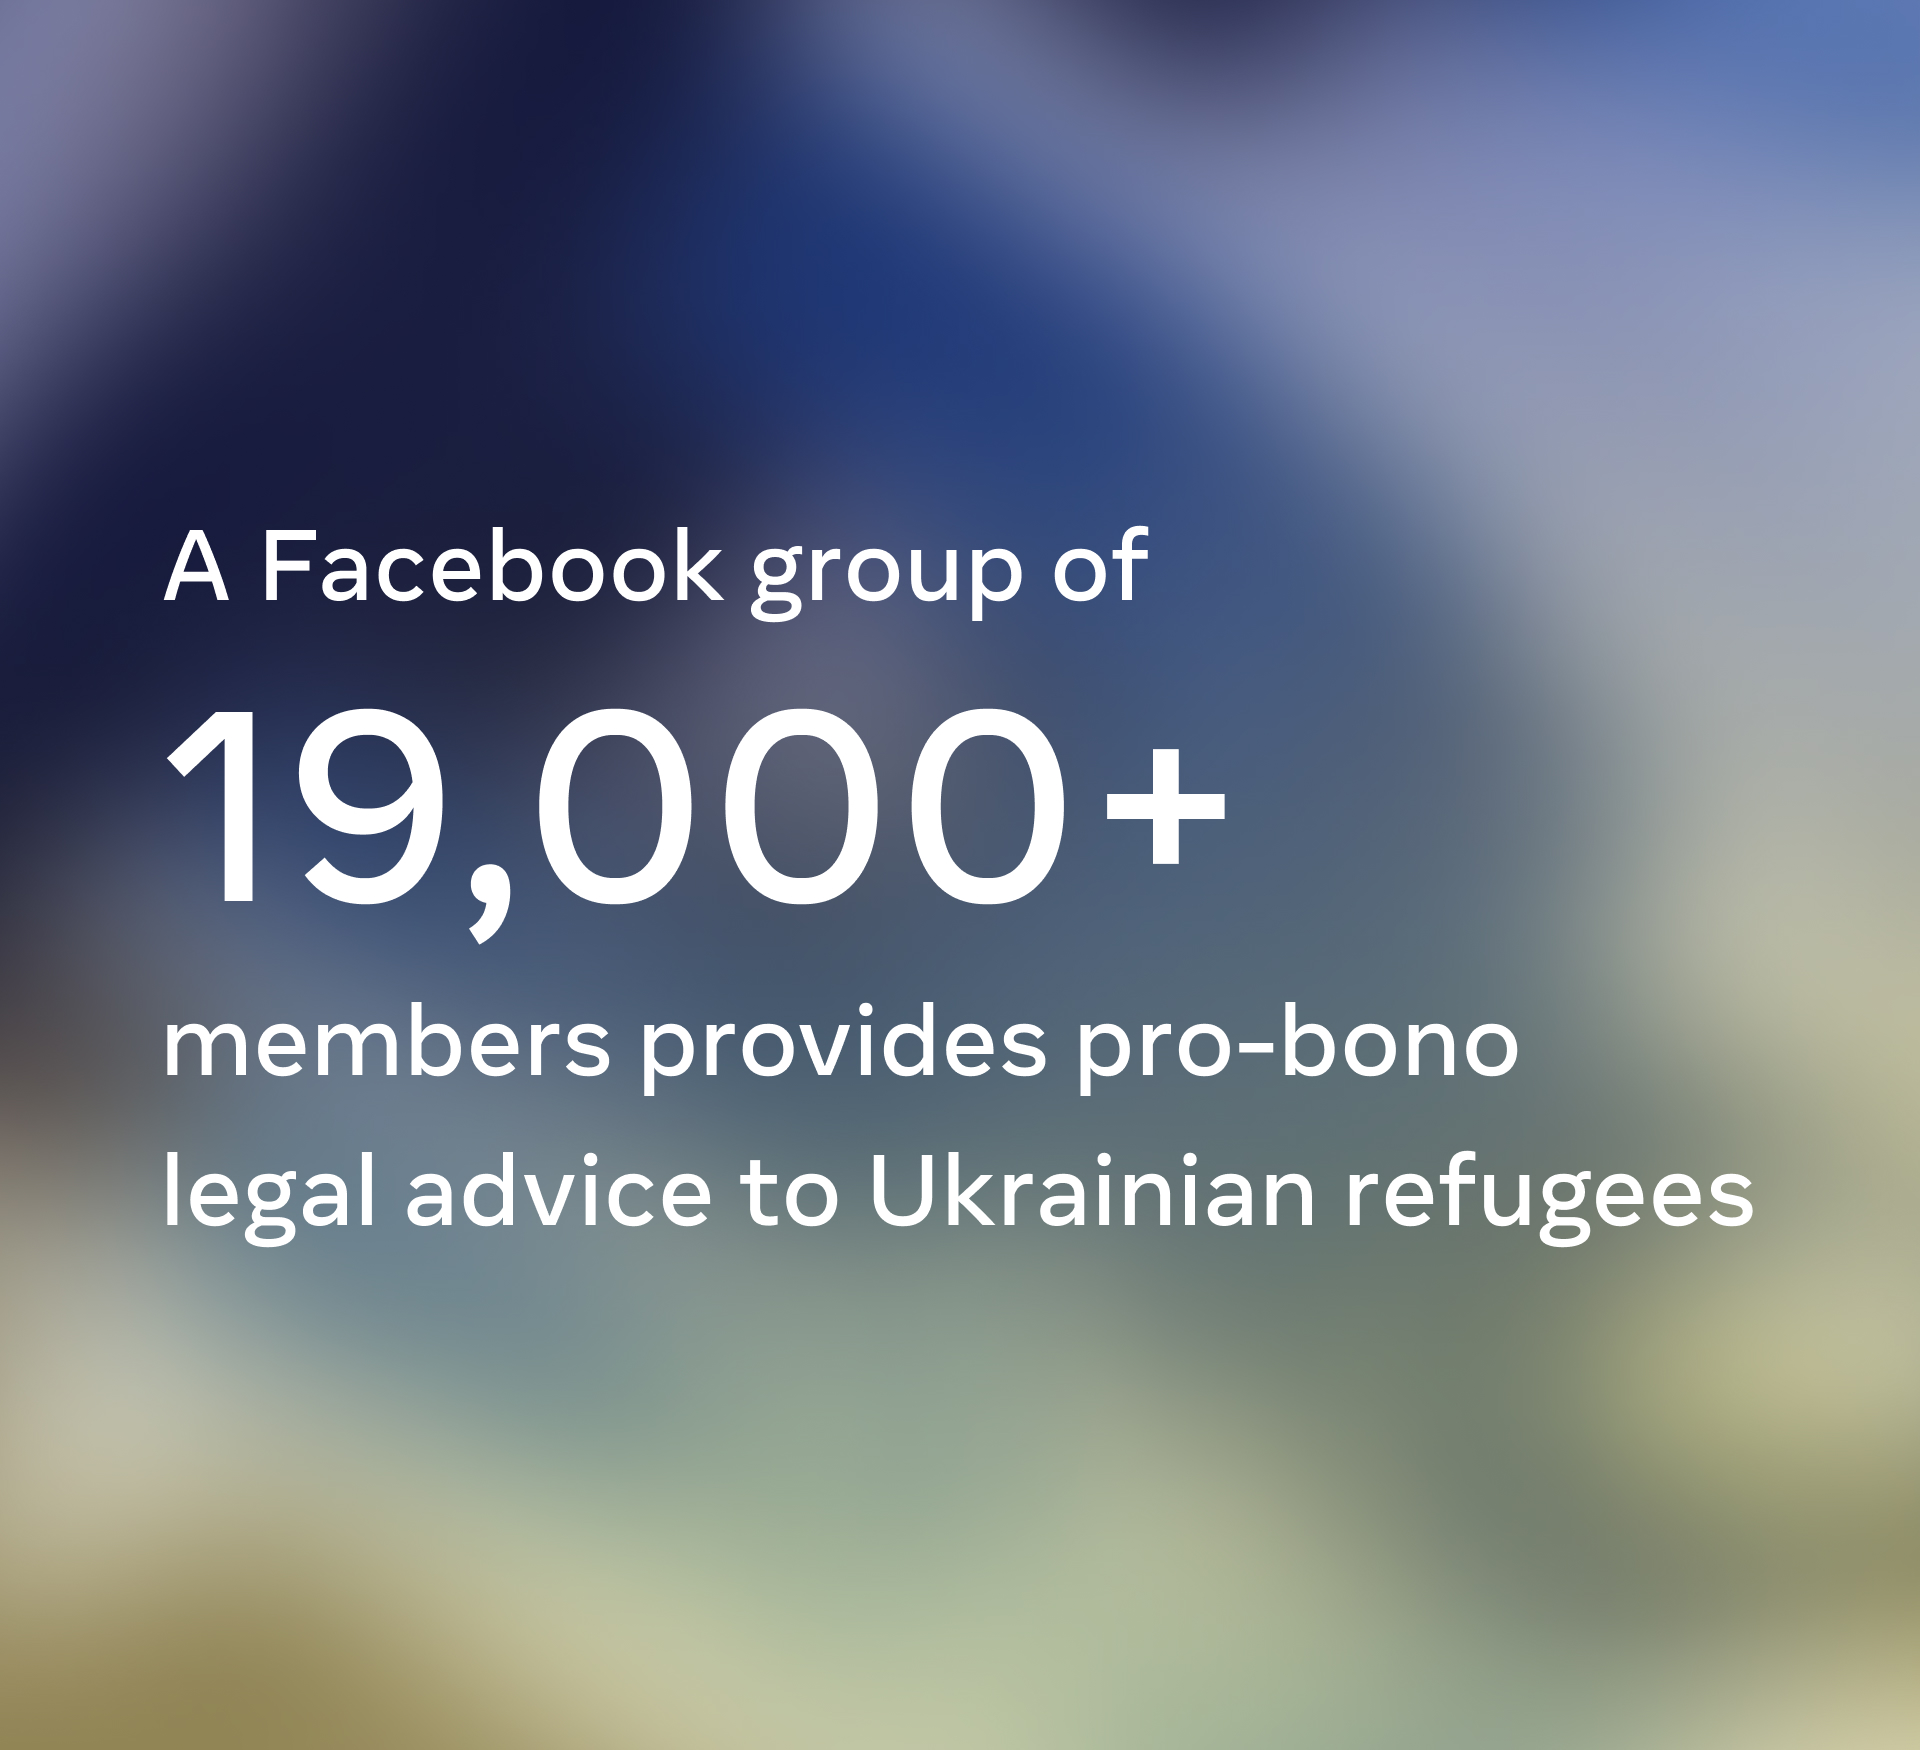 Graphic describing the Facebook group of 19,000+ members providing pro-bono legal advice to Ukrainian refugees